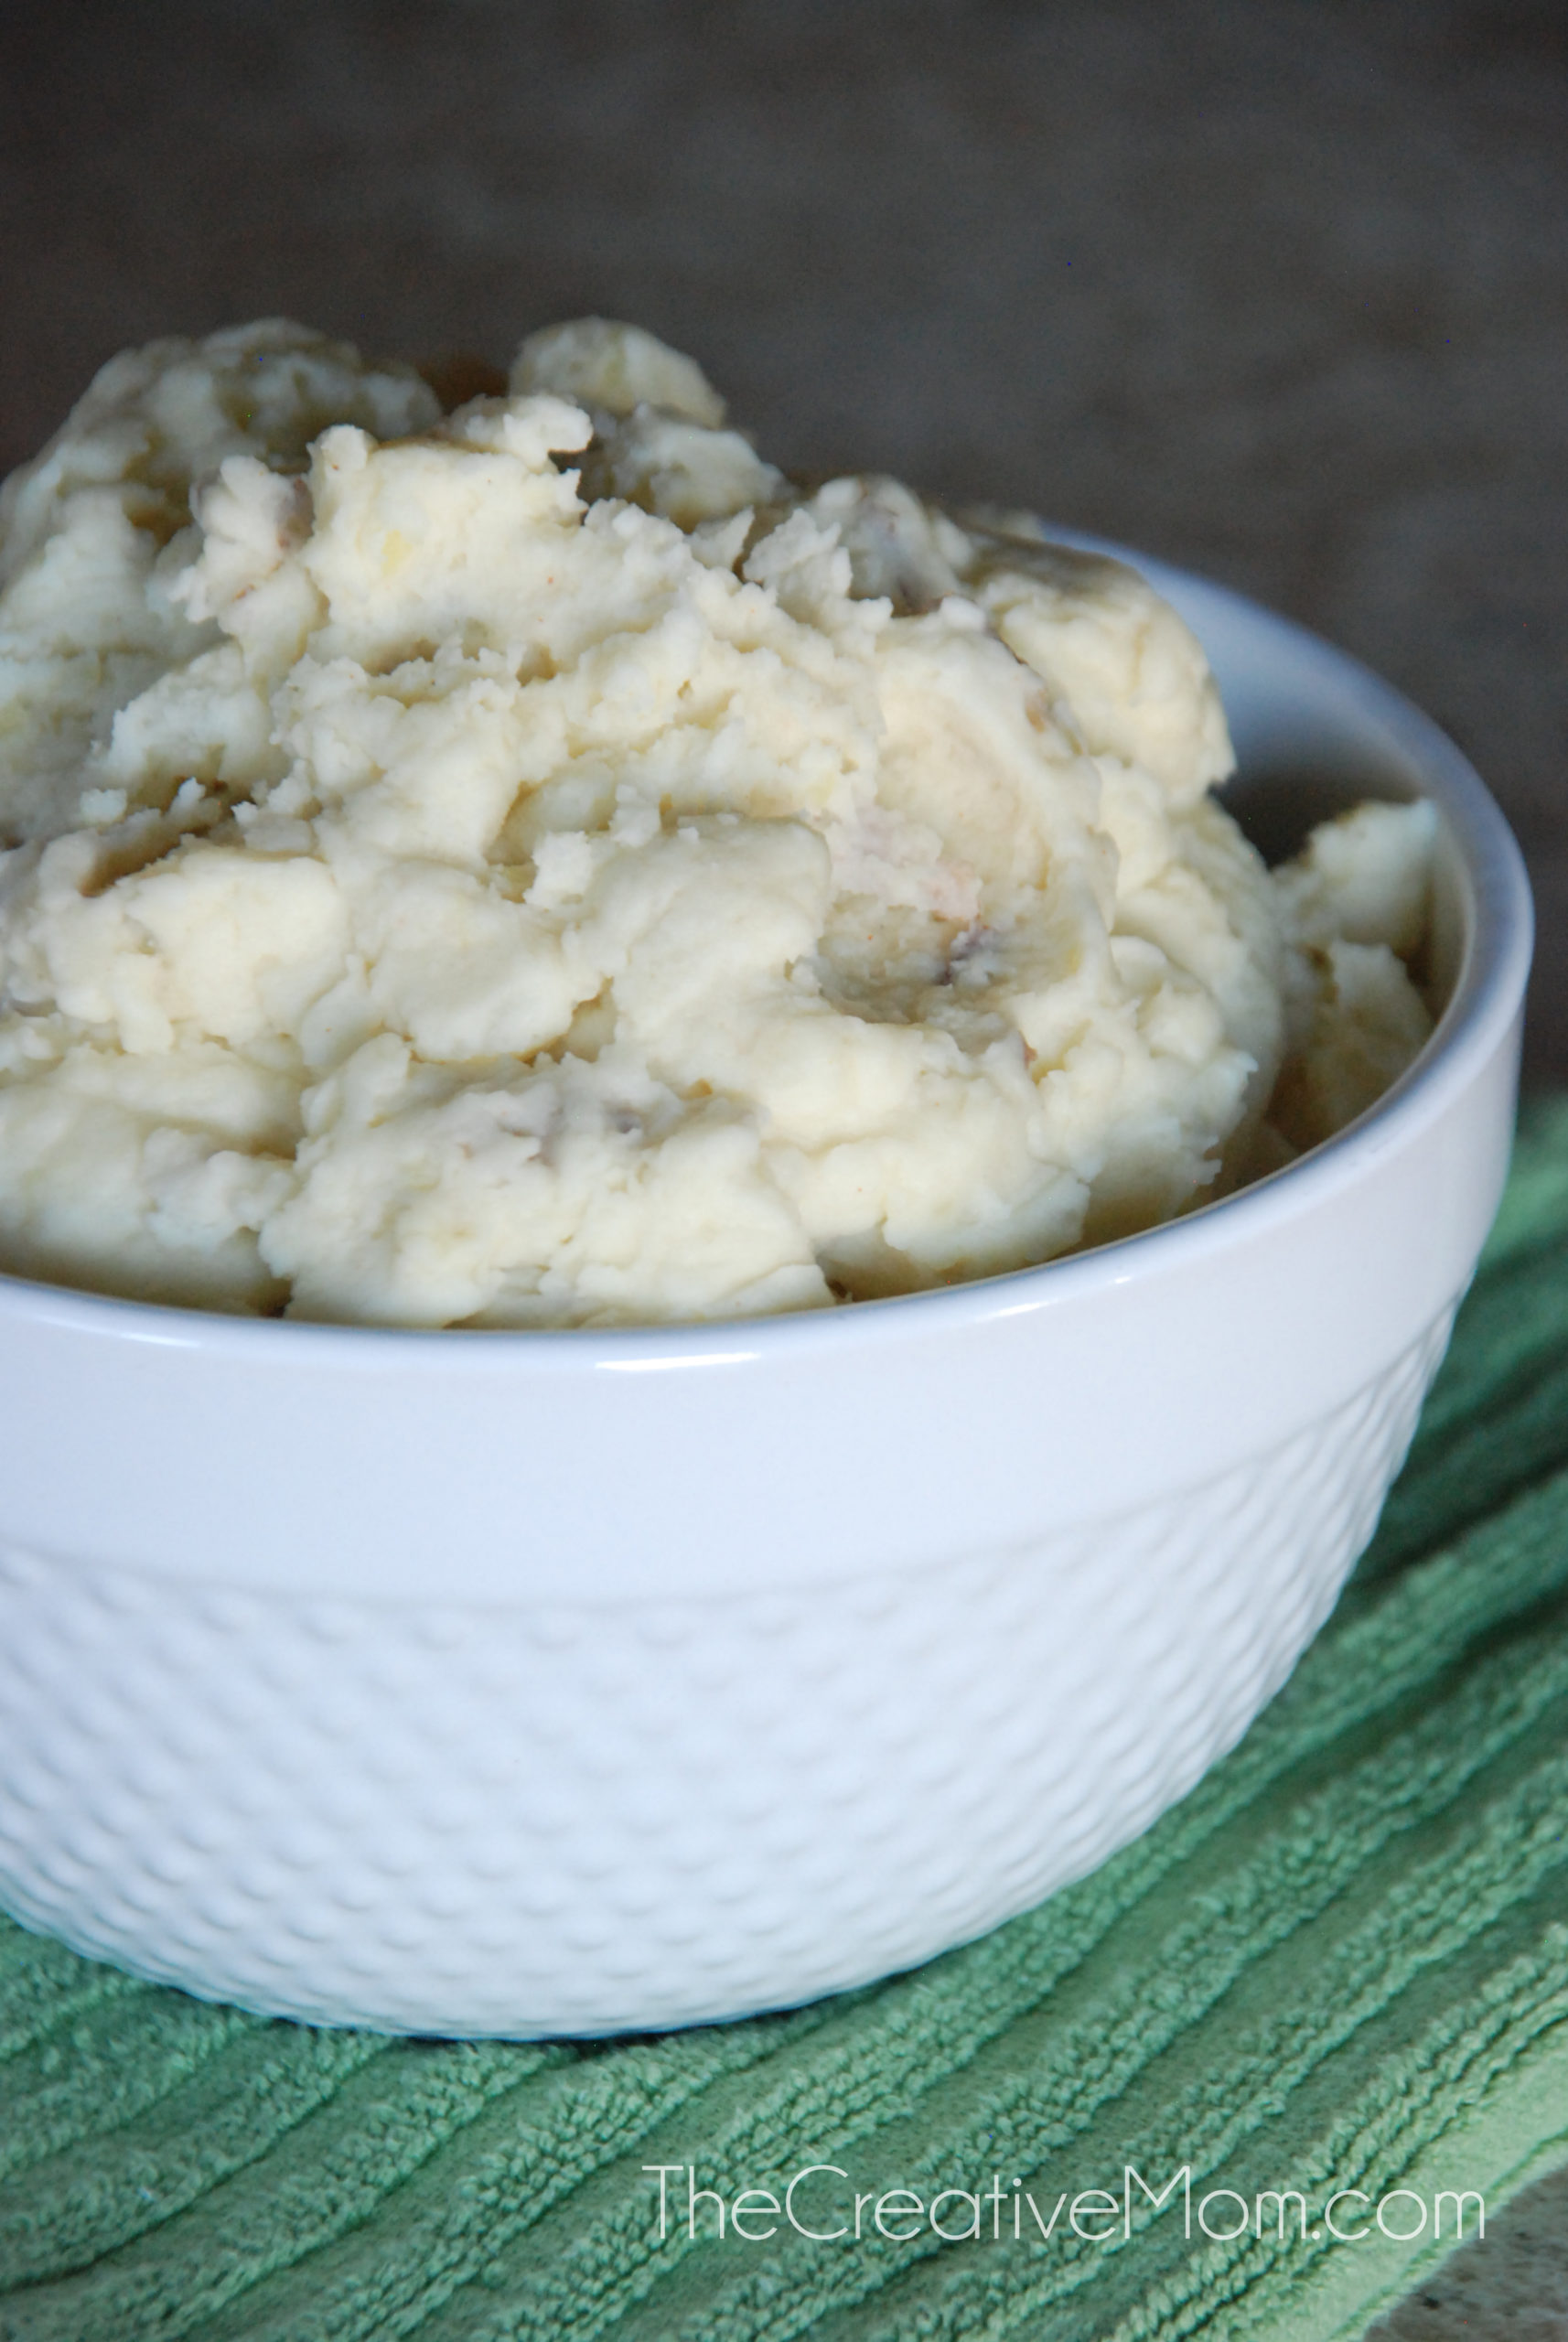 https://www.thecreativemom.com/wp-content/uploads/2013/11/cream-cheese-mashed-potatoes-1-scaled.jpg